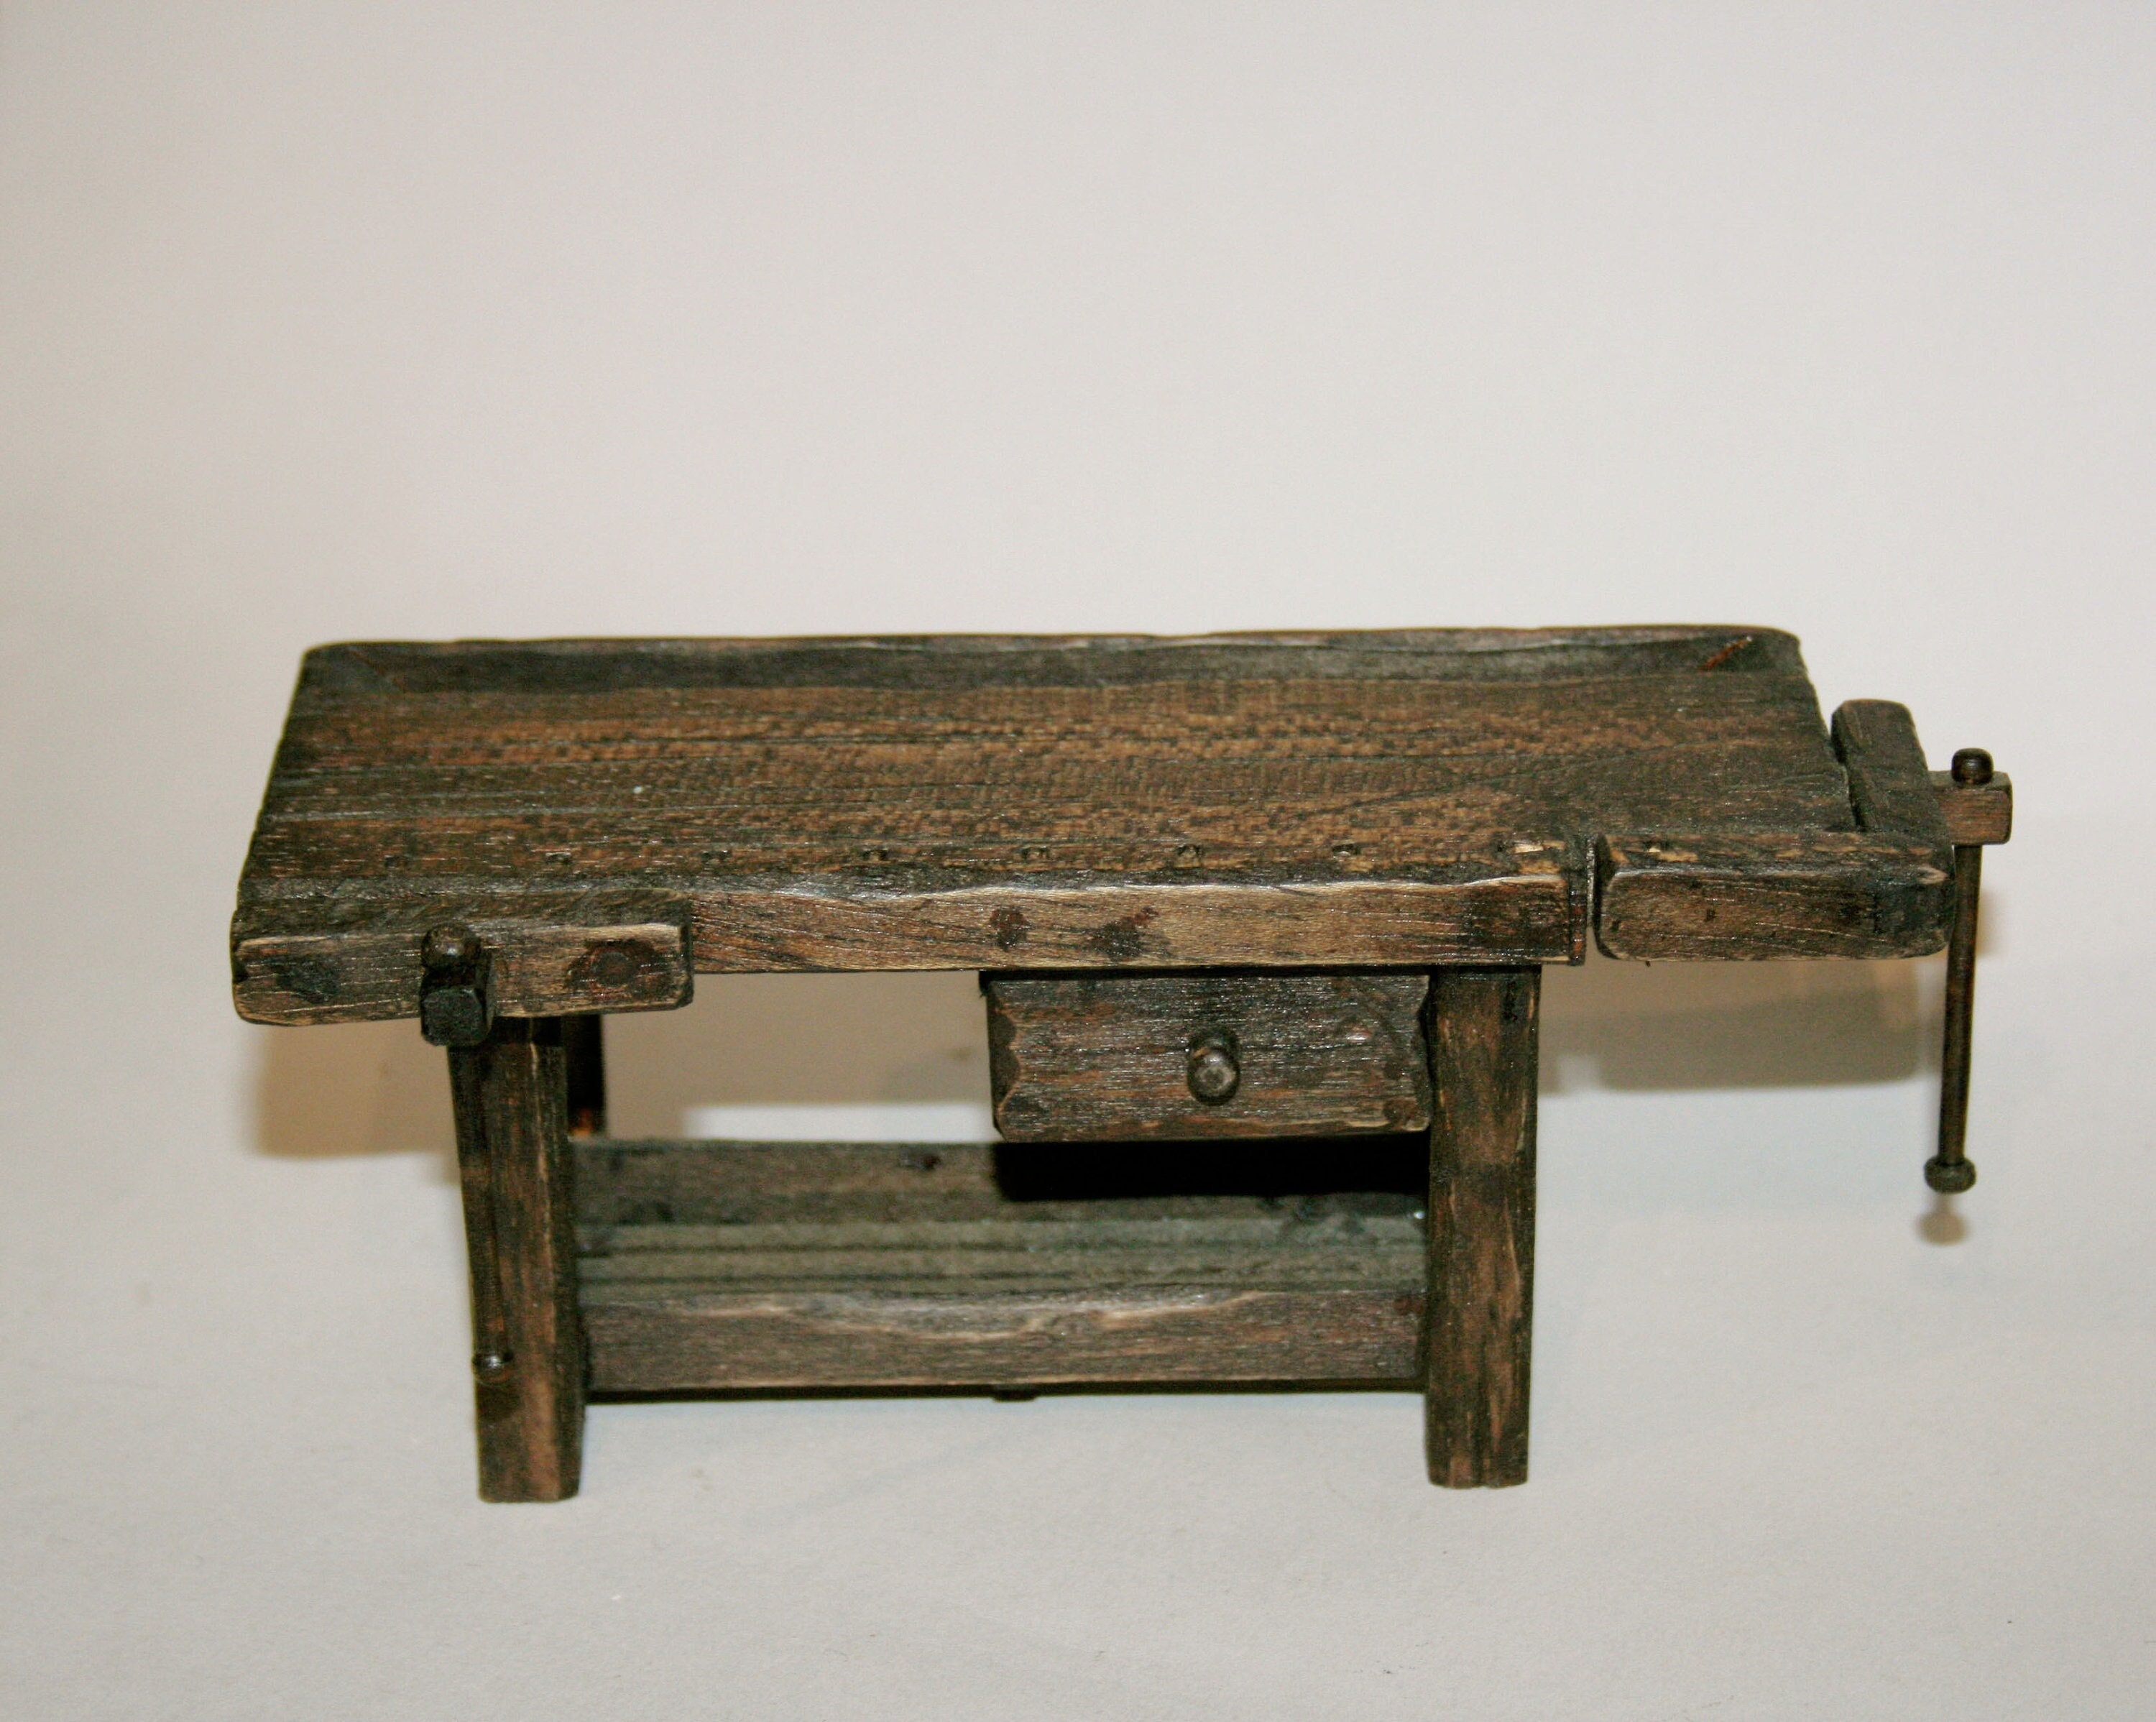 Real miniature carpentry tools kit, Mame-do-raku Kozuchi-No